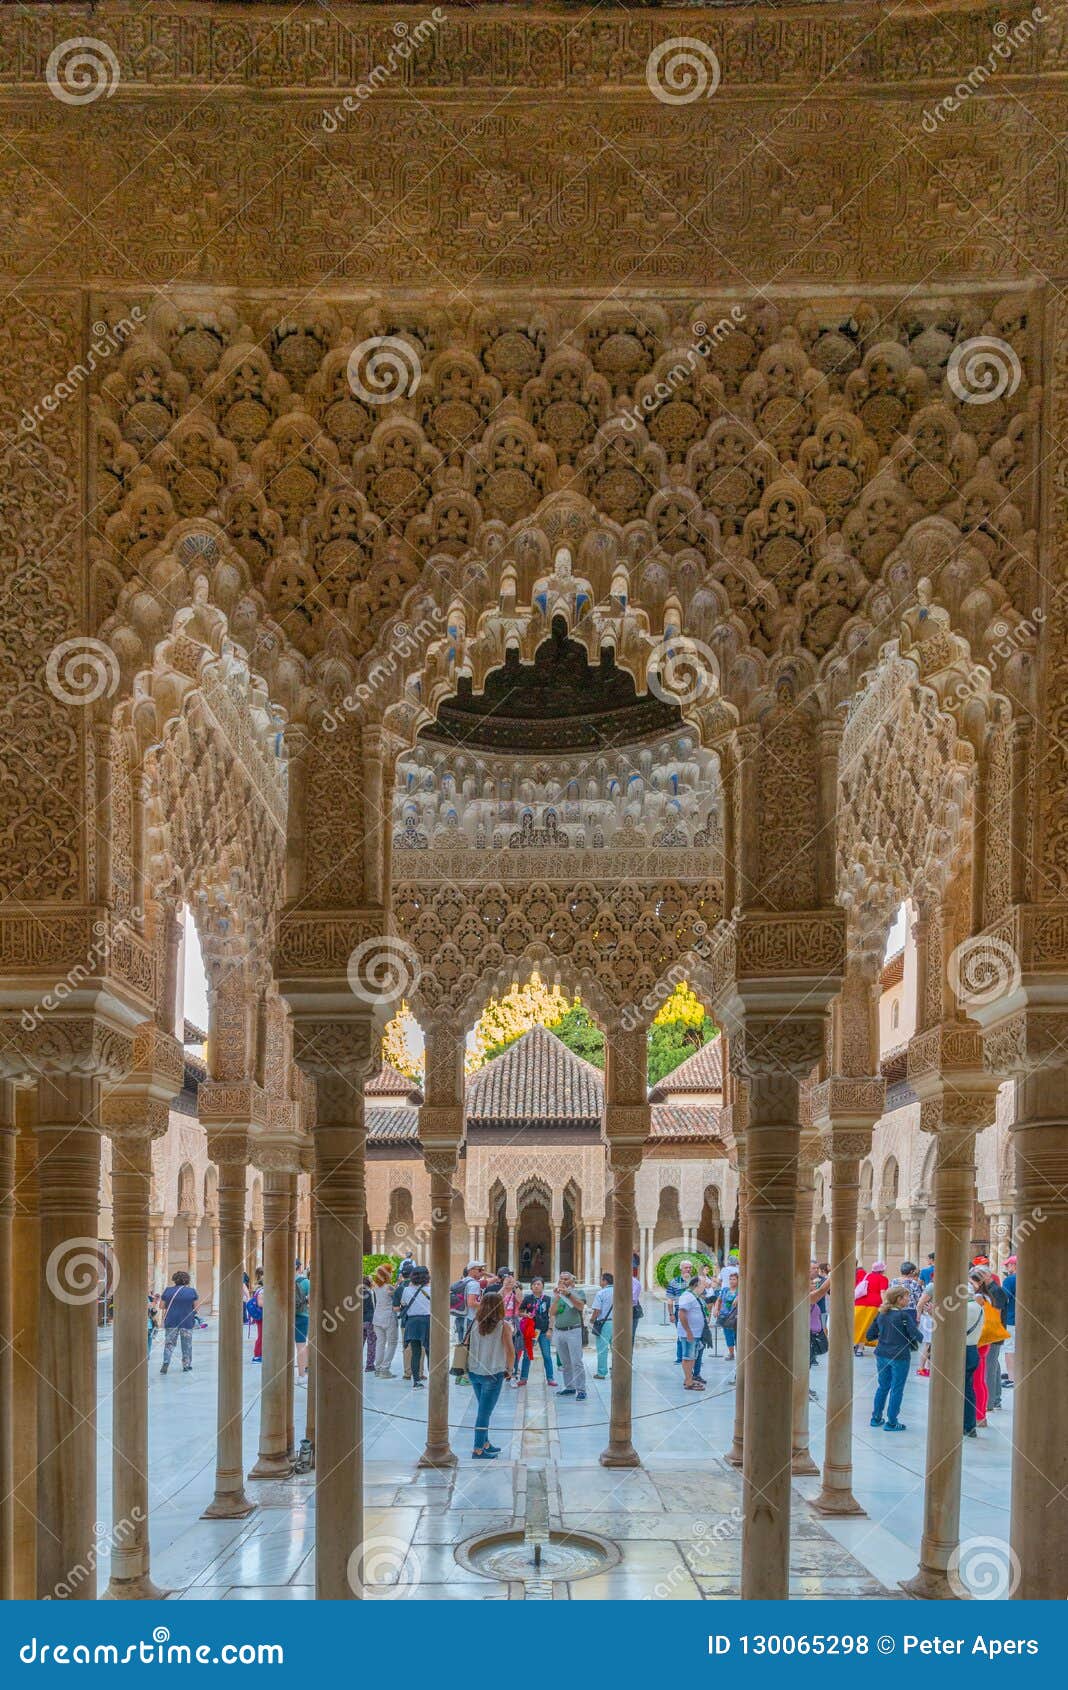 Premium Photo | The alhambra in granada spain interior detail of a dome